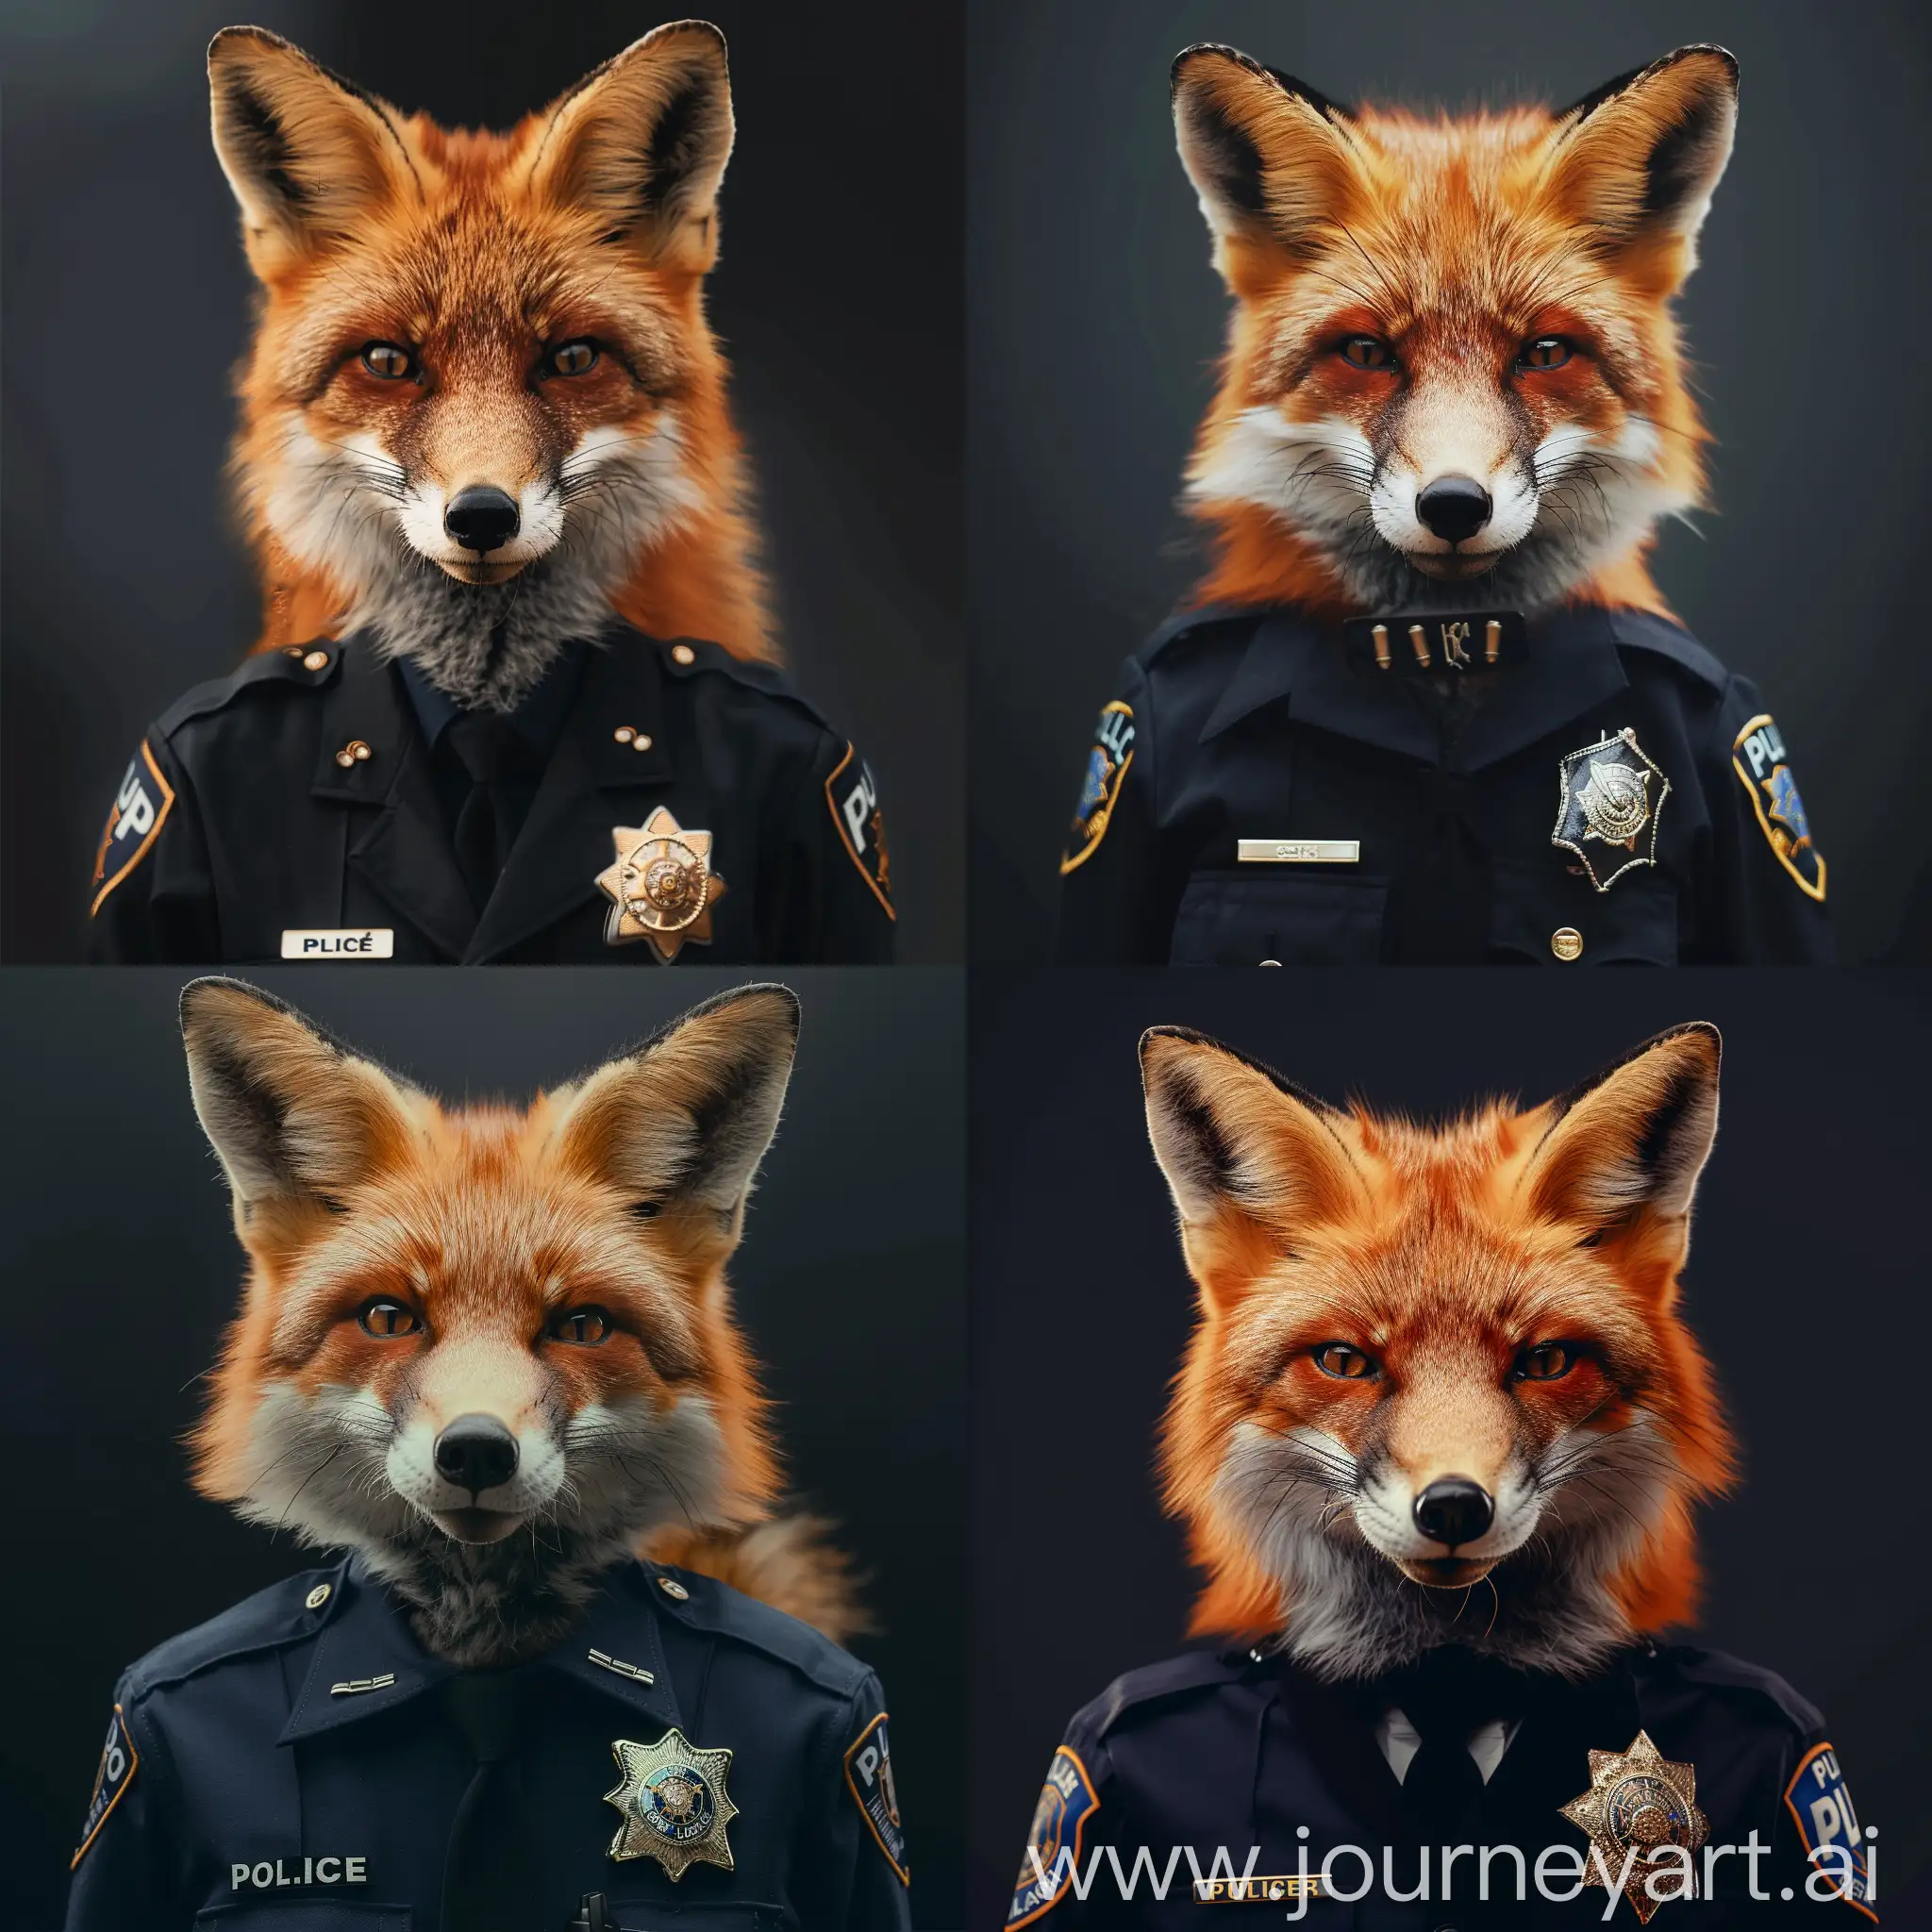 Cunning-Fox-in-Police-Uniform-Stands-Alert